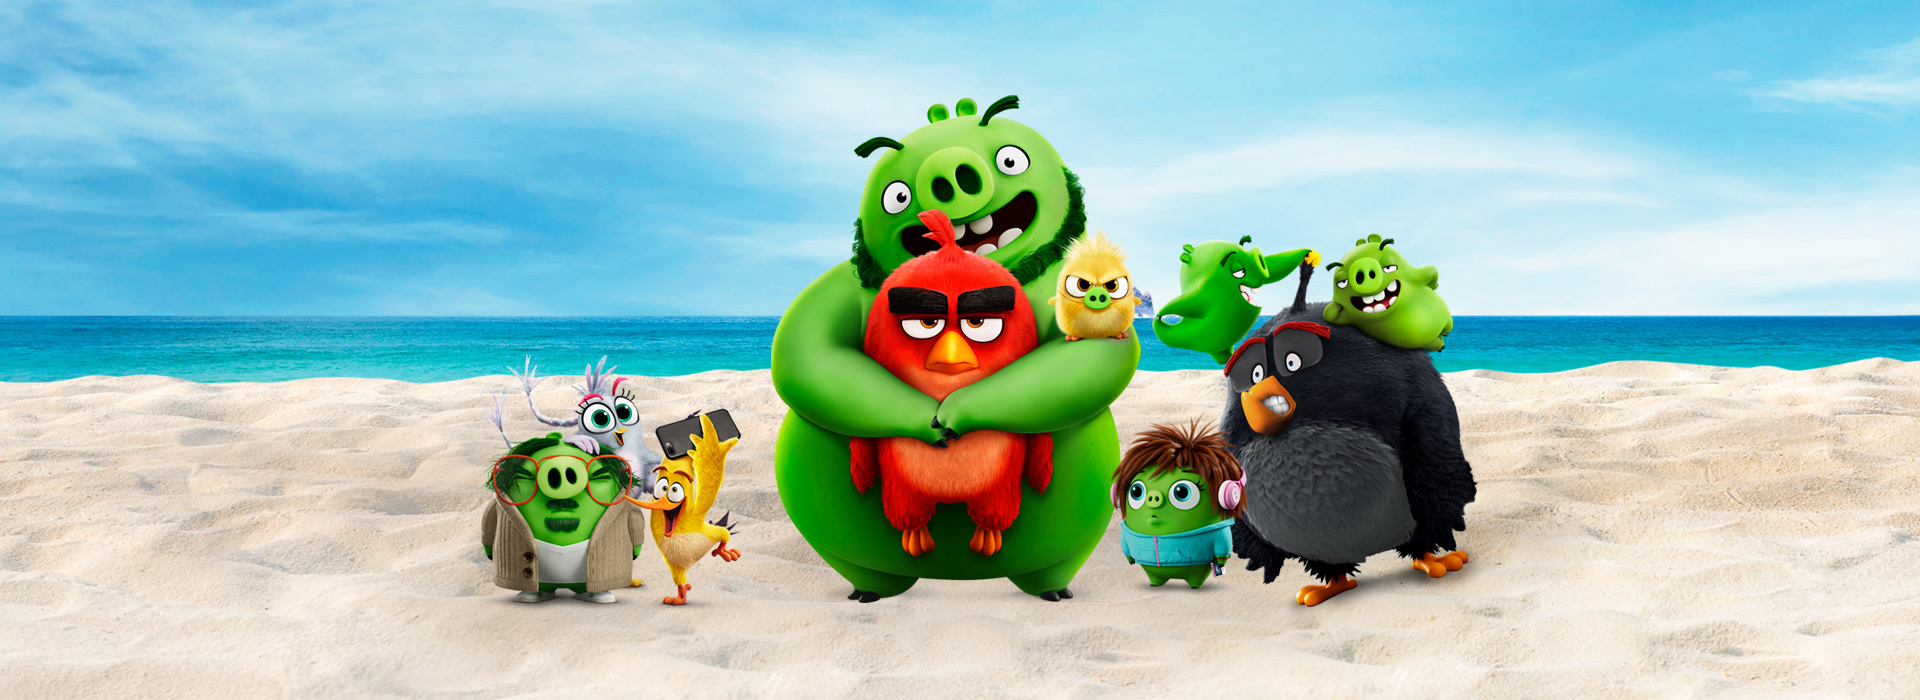 Movie poster The Angry Birds Movie 2